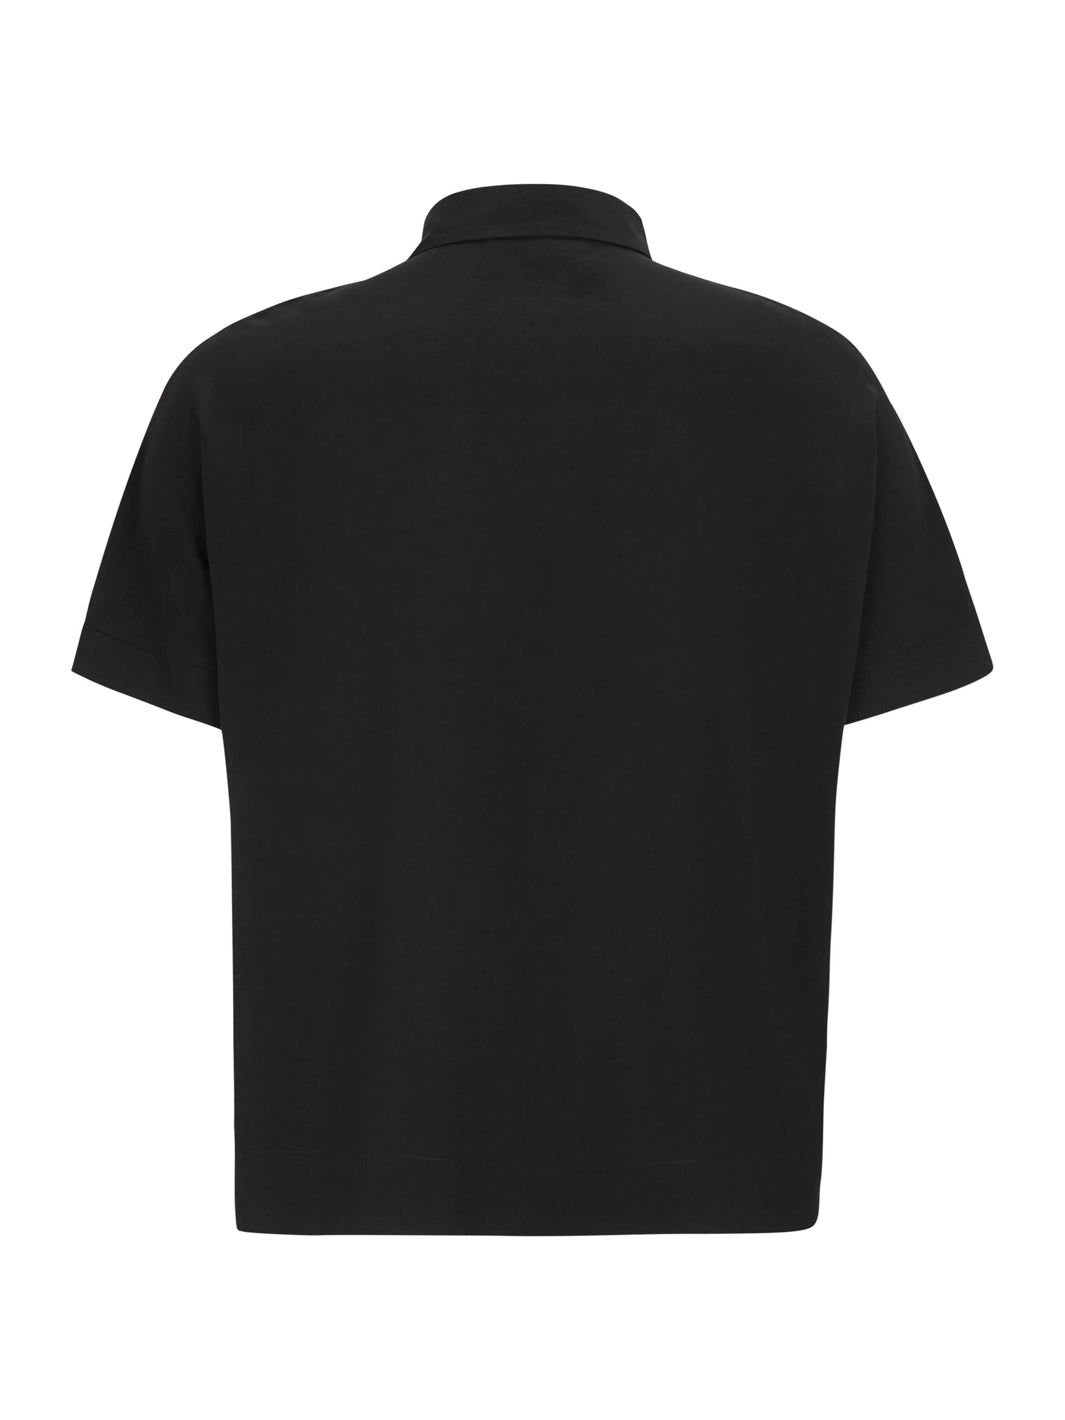 Soft Rebels SRFreedom SS shirt black - Online-Mode